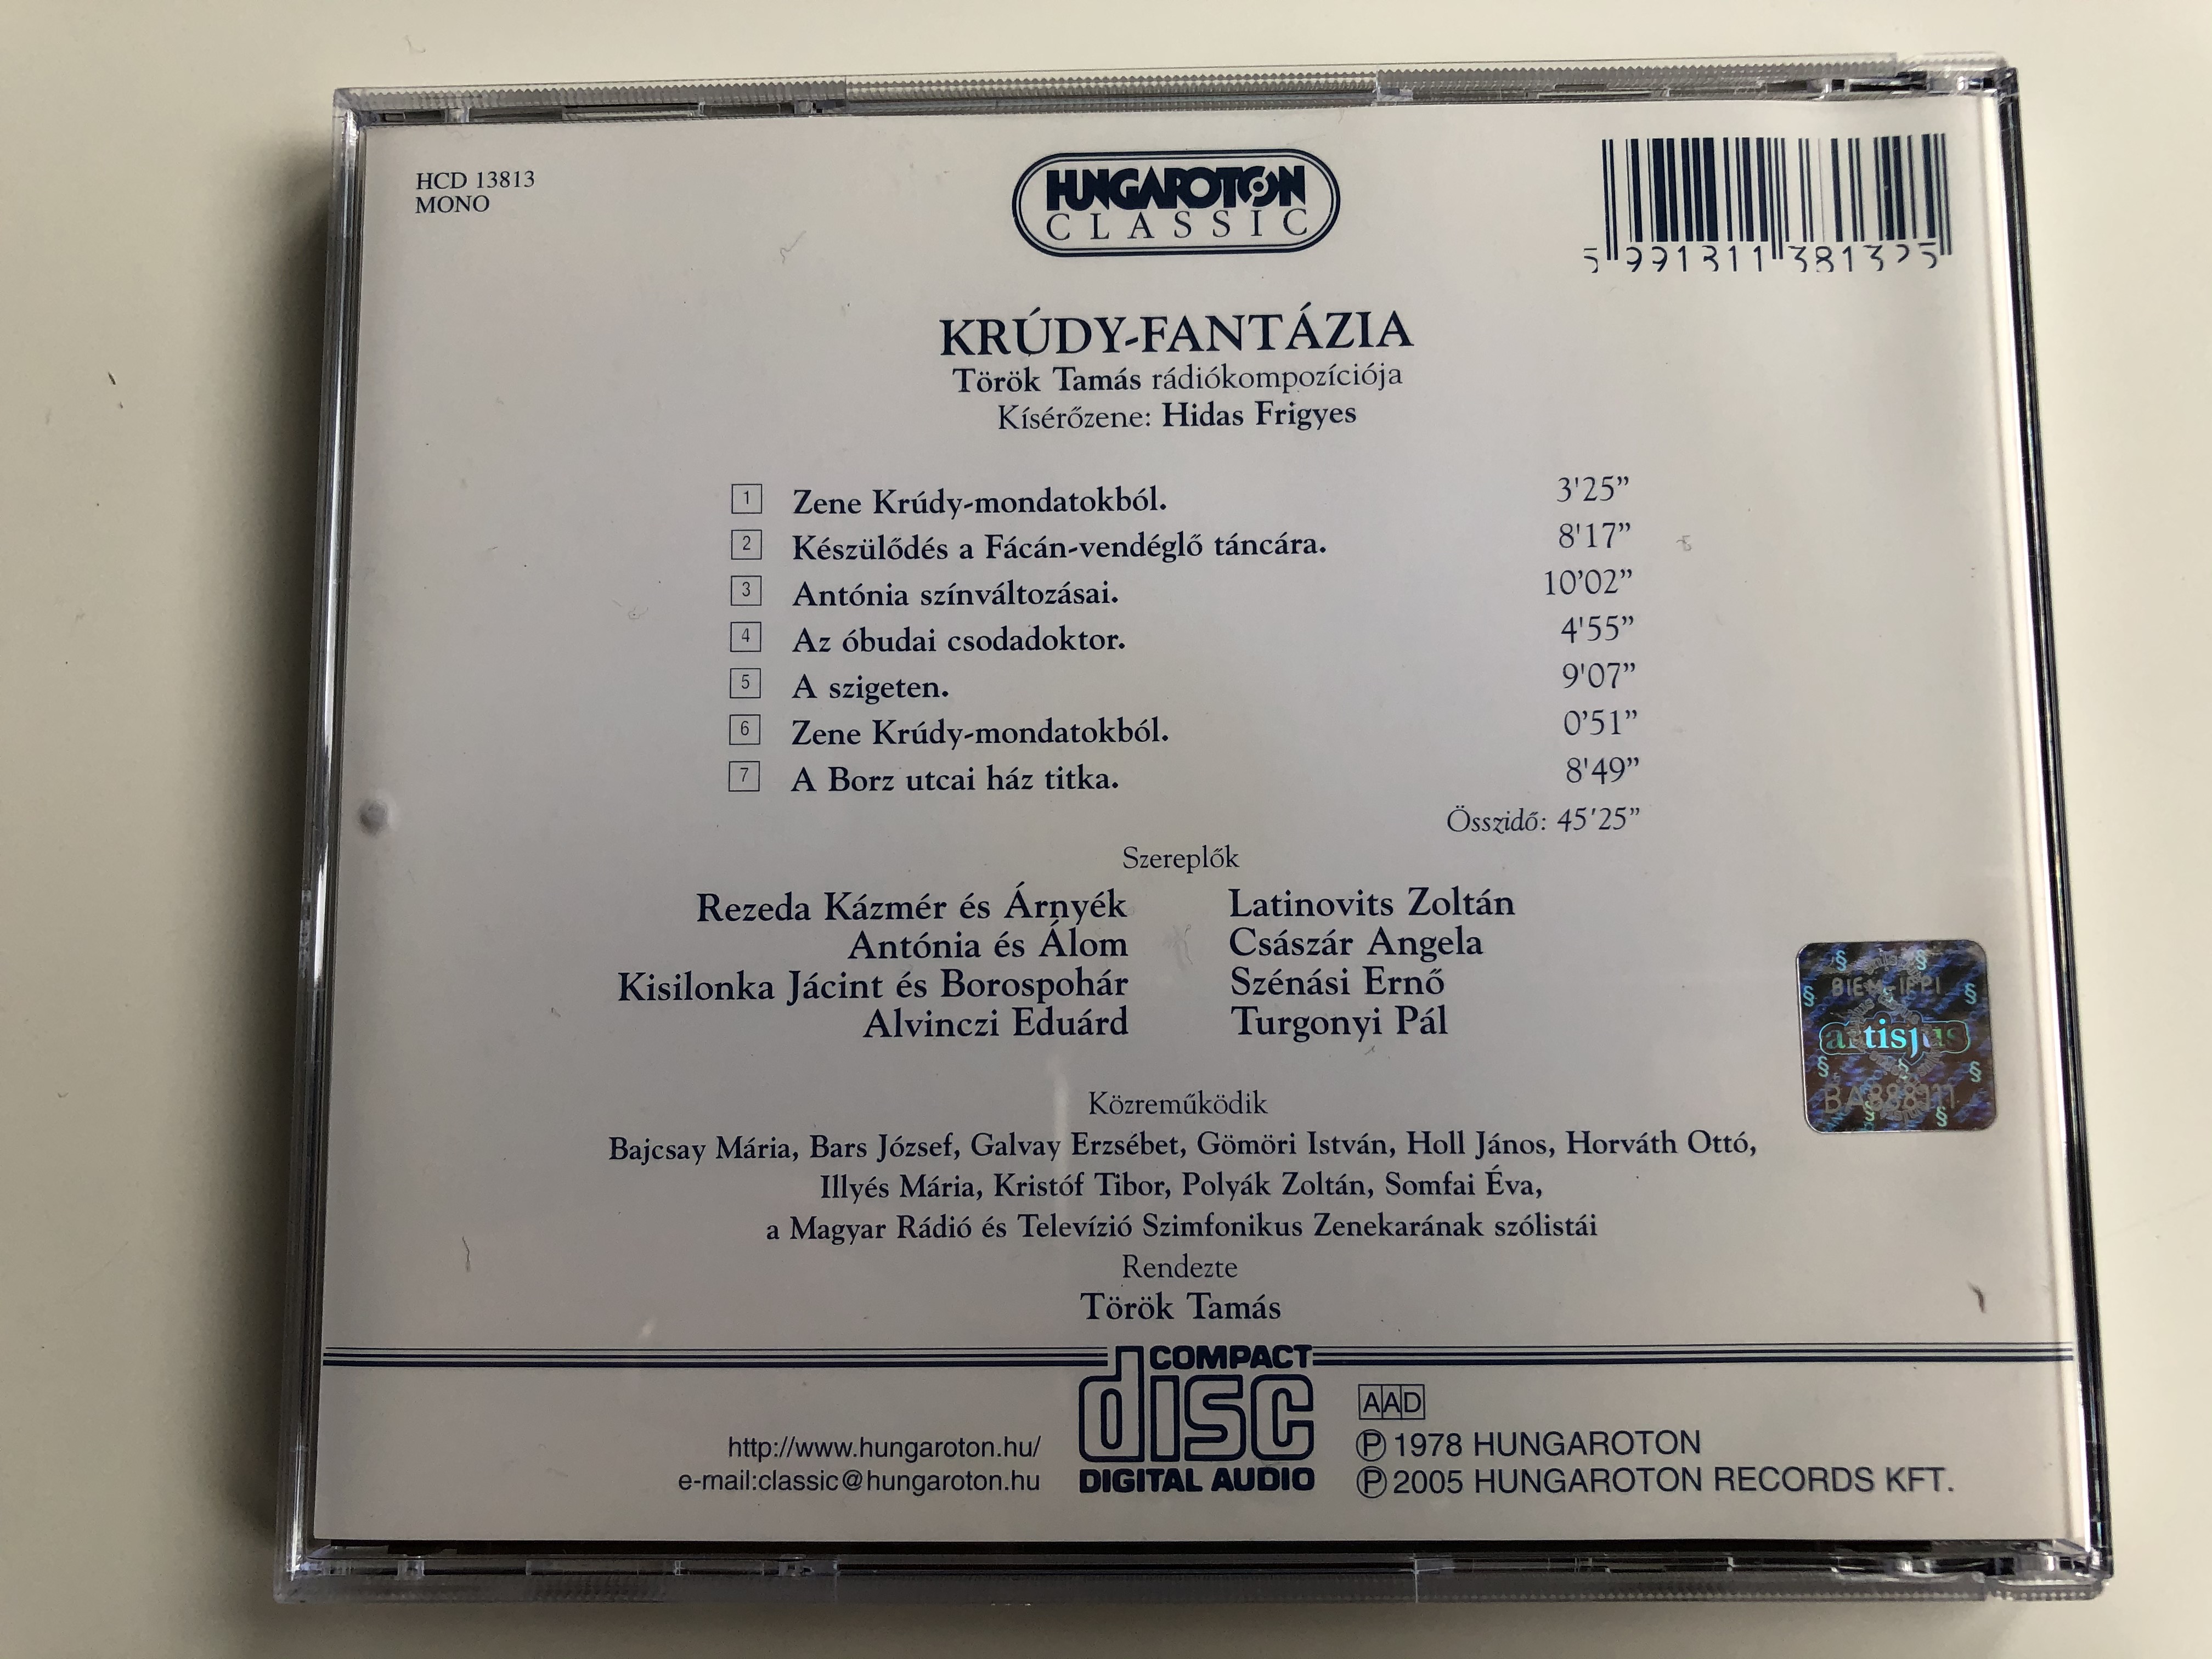 krudy-fantazia-latinovits-zoltan-hungaroton-classic-audio-cd-2005-mono-hcd-13813-4-.jpg